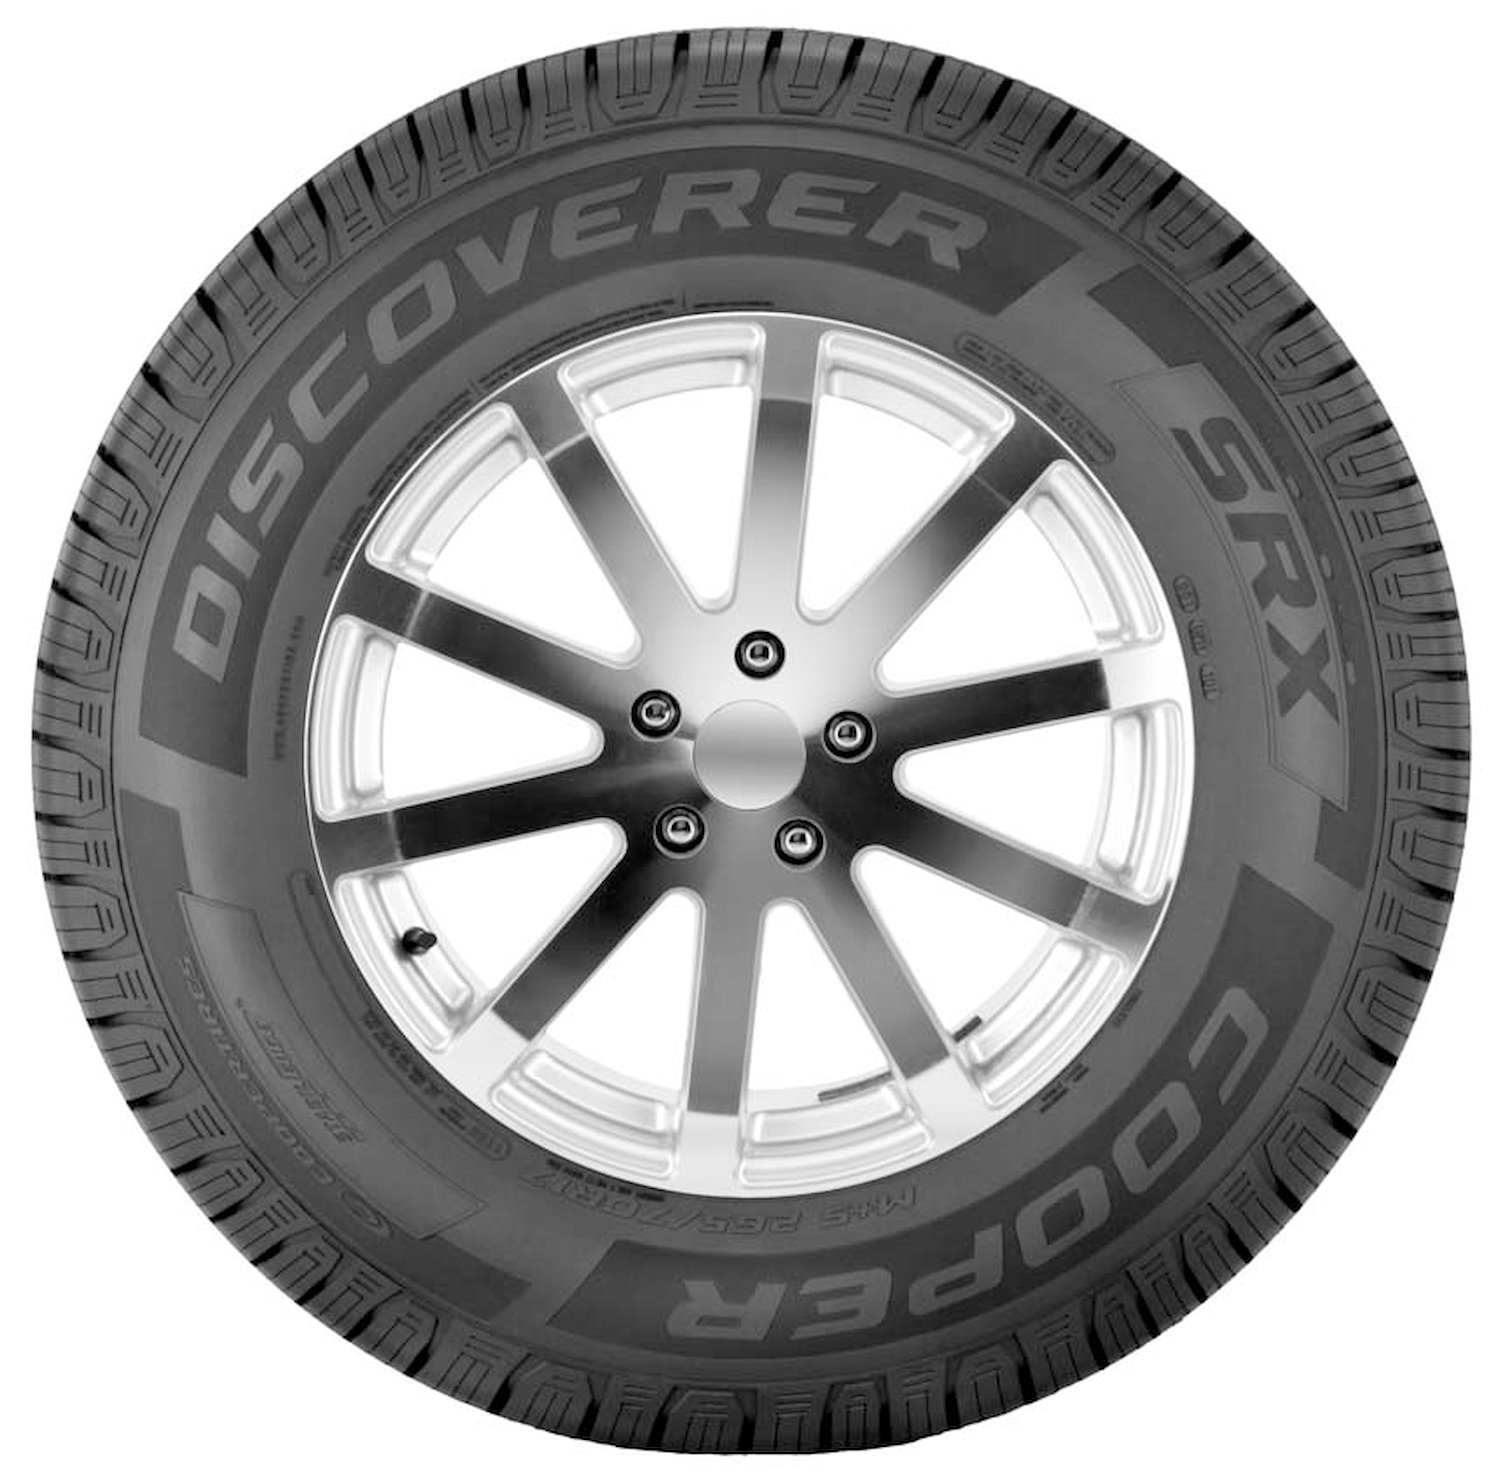 Discoverer SRX Commuter/Touring Tire, 265/70R17